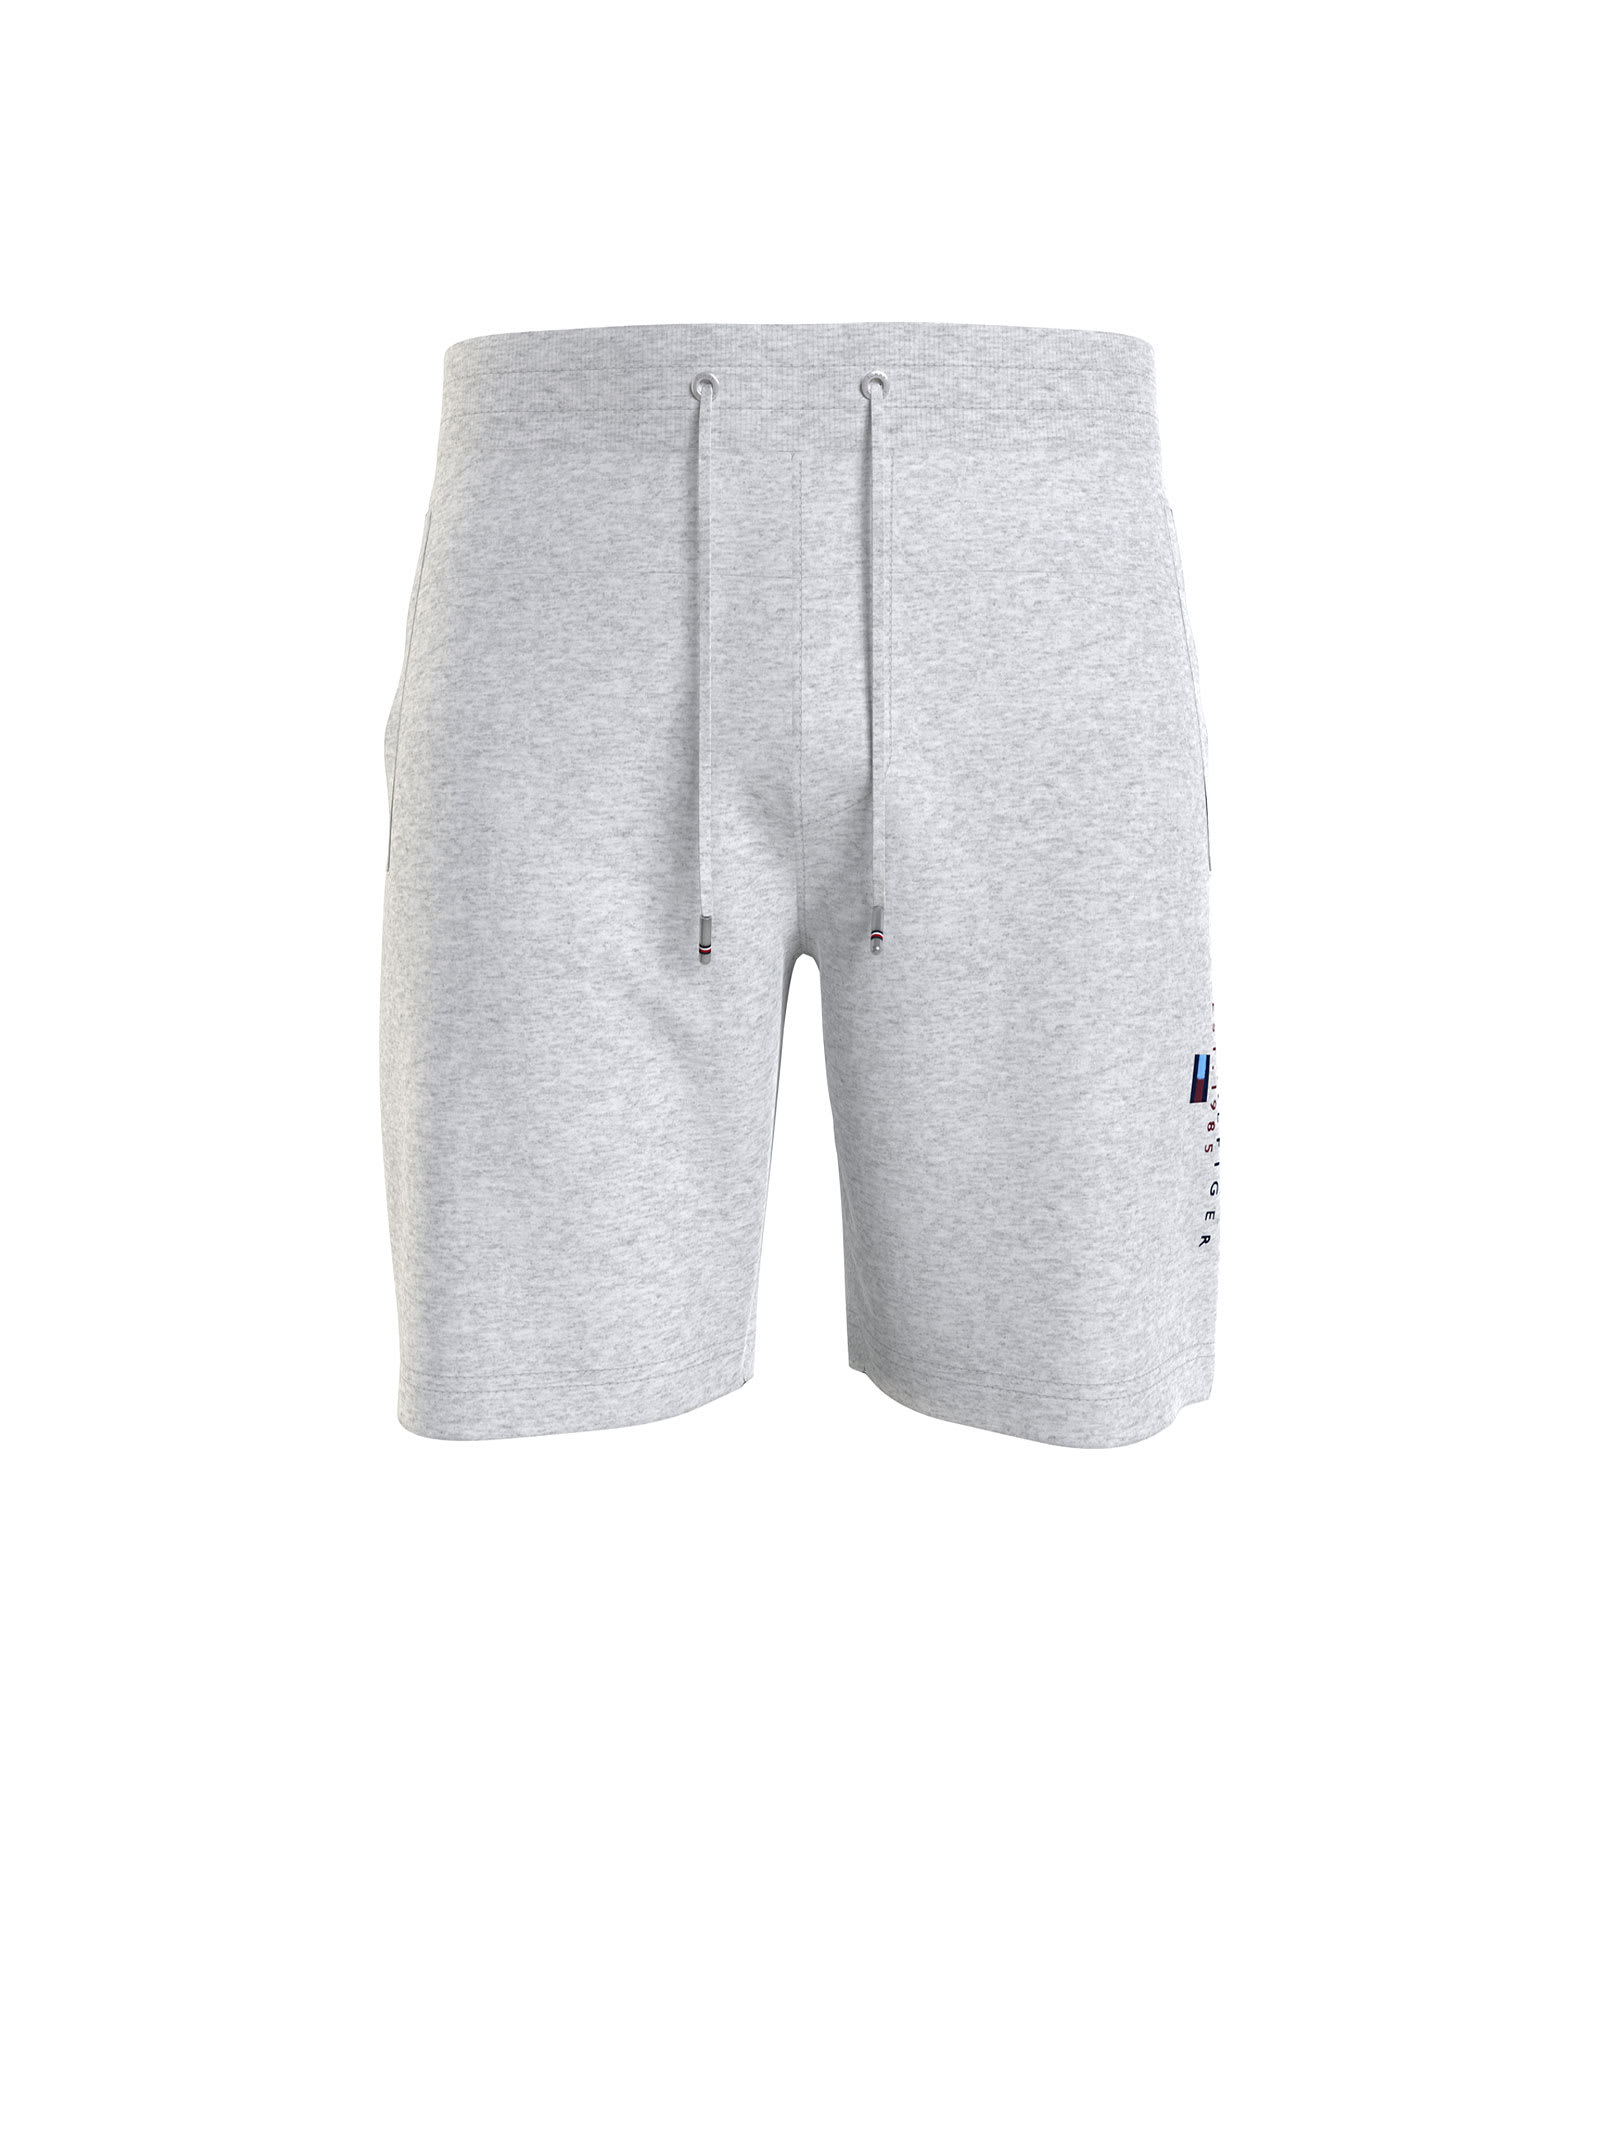 Tommy Hilfiger Grey Cotton Bermuda Shorts